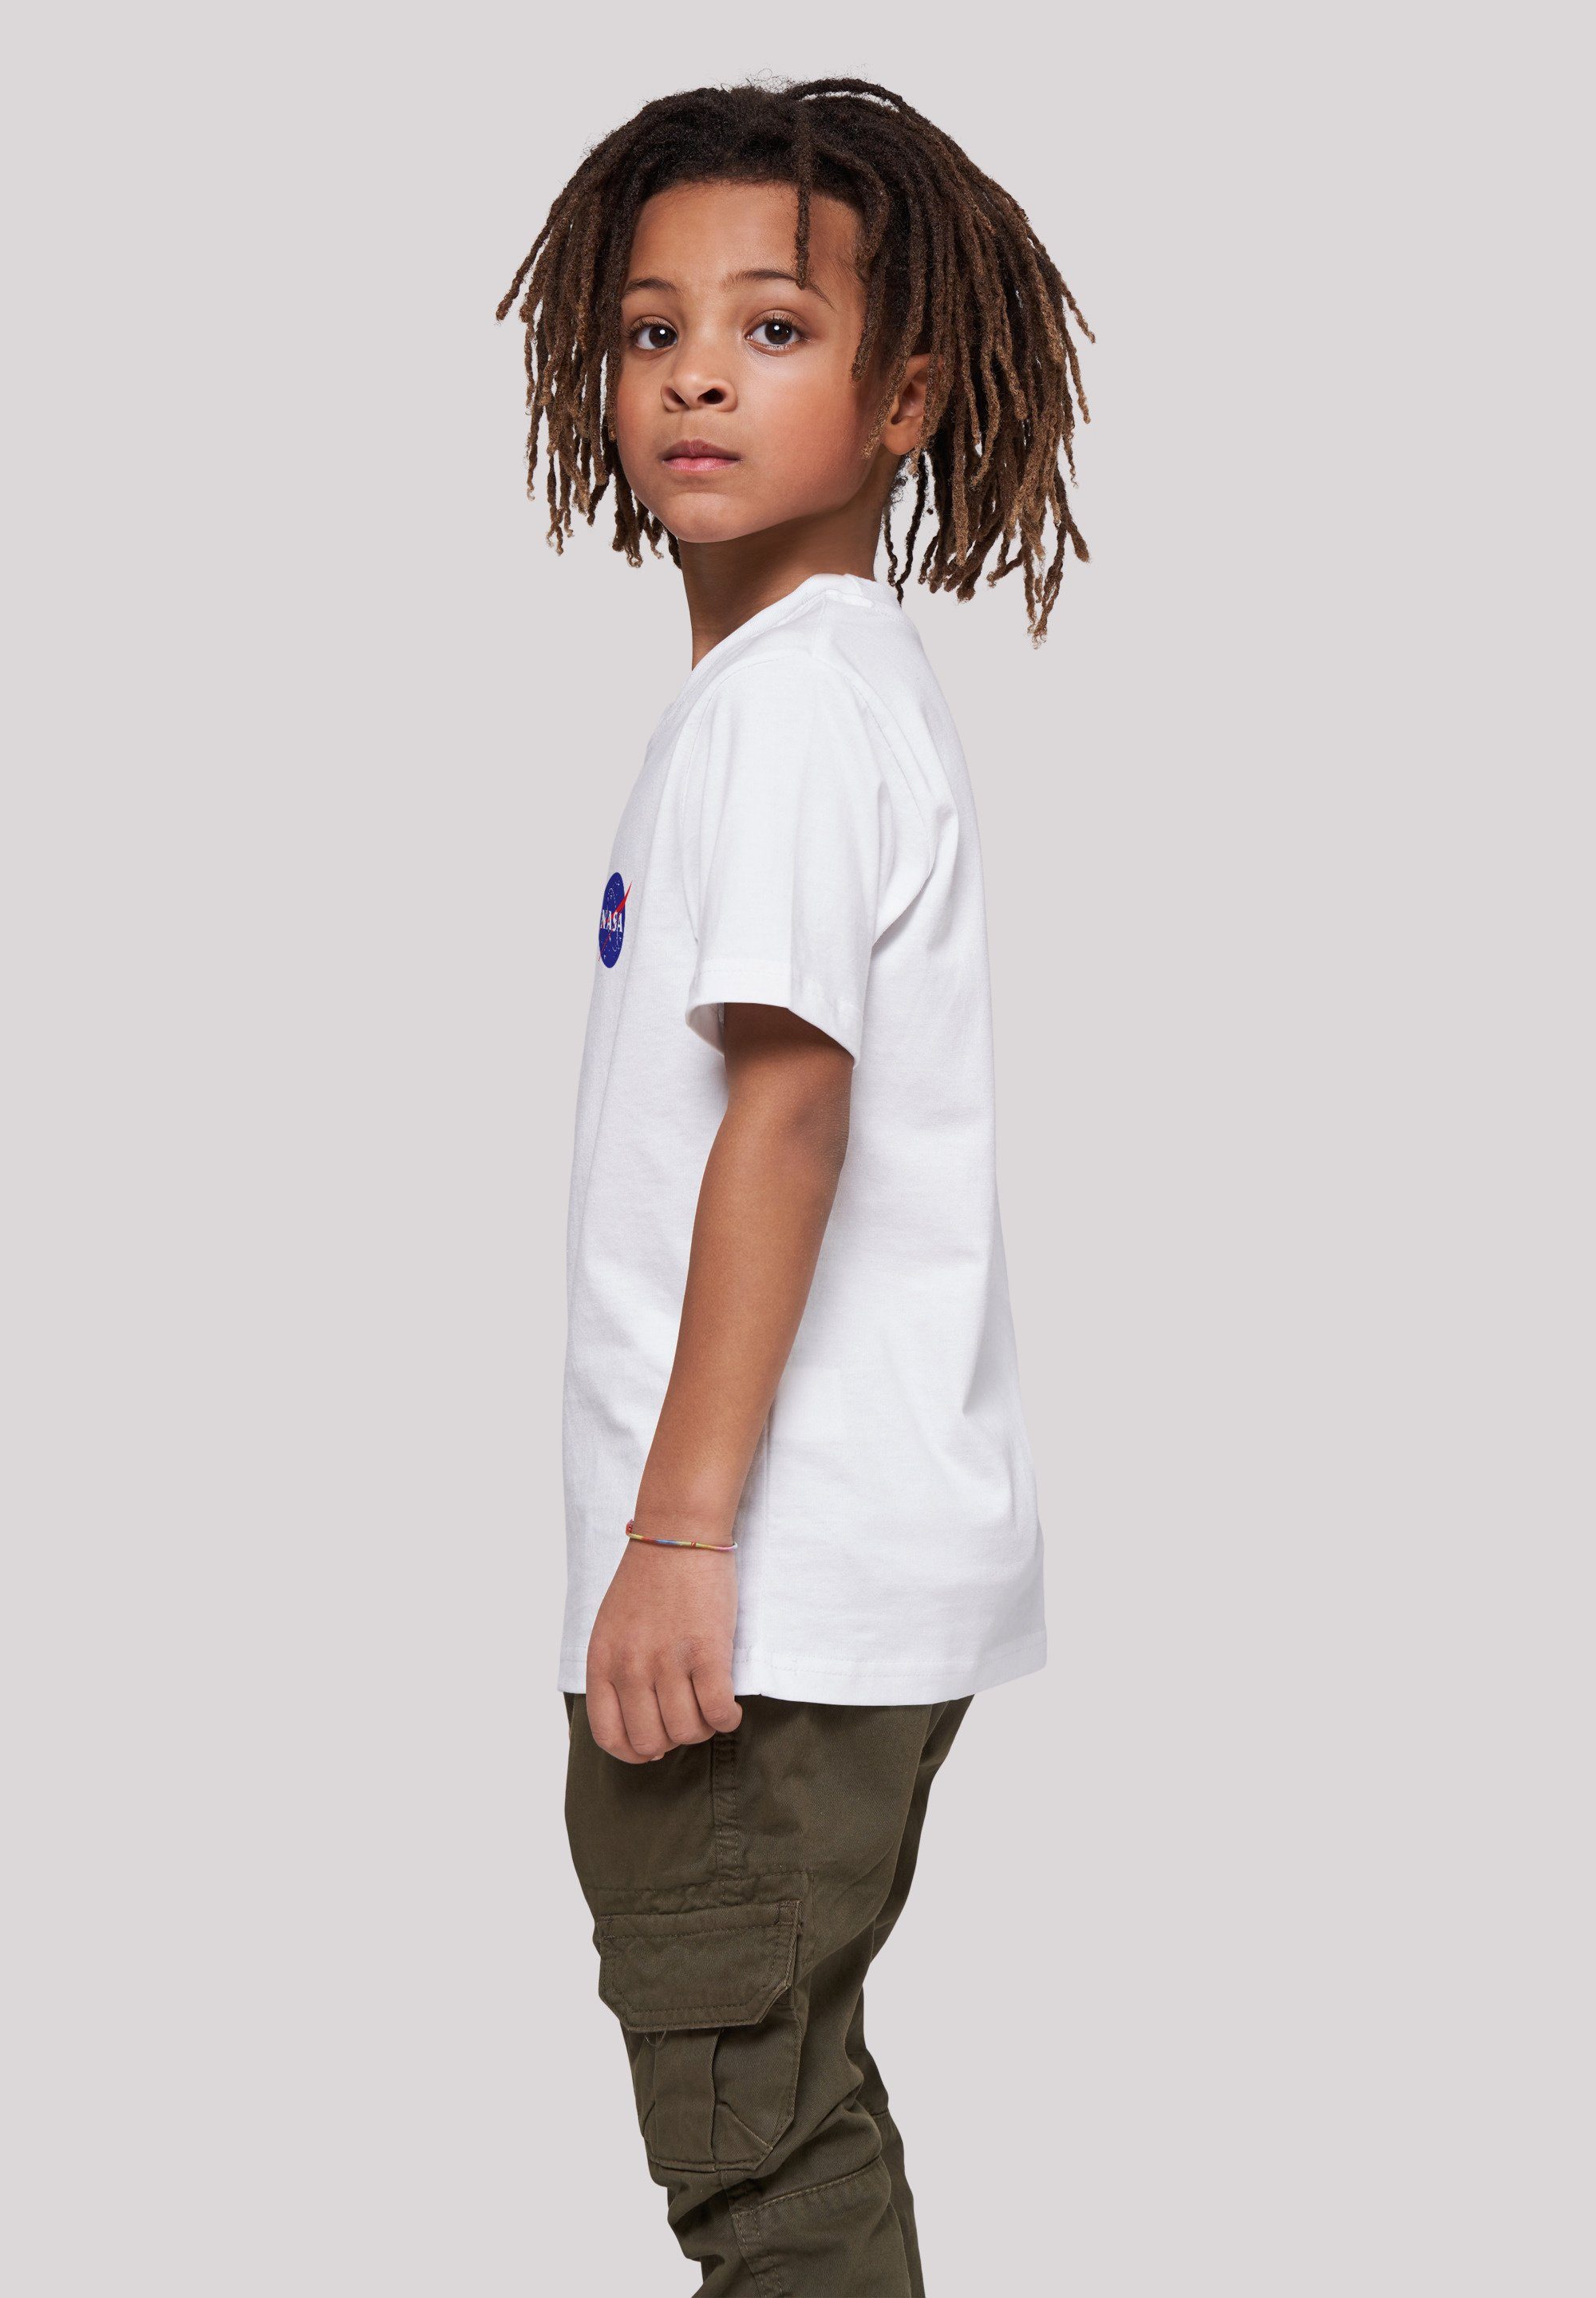 F4NT4STIC T-Shirt NASA Logo Chest Classic Merch,Jungen,Mädchen,Bedruckt Insignia White Unisex Kinder,Premium